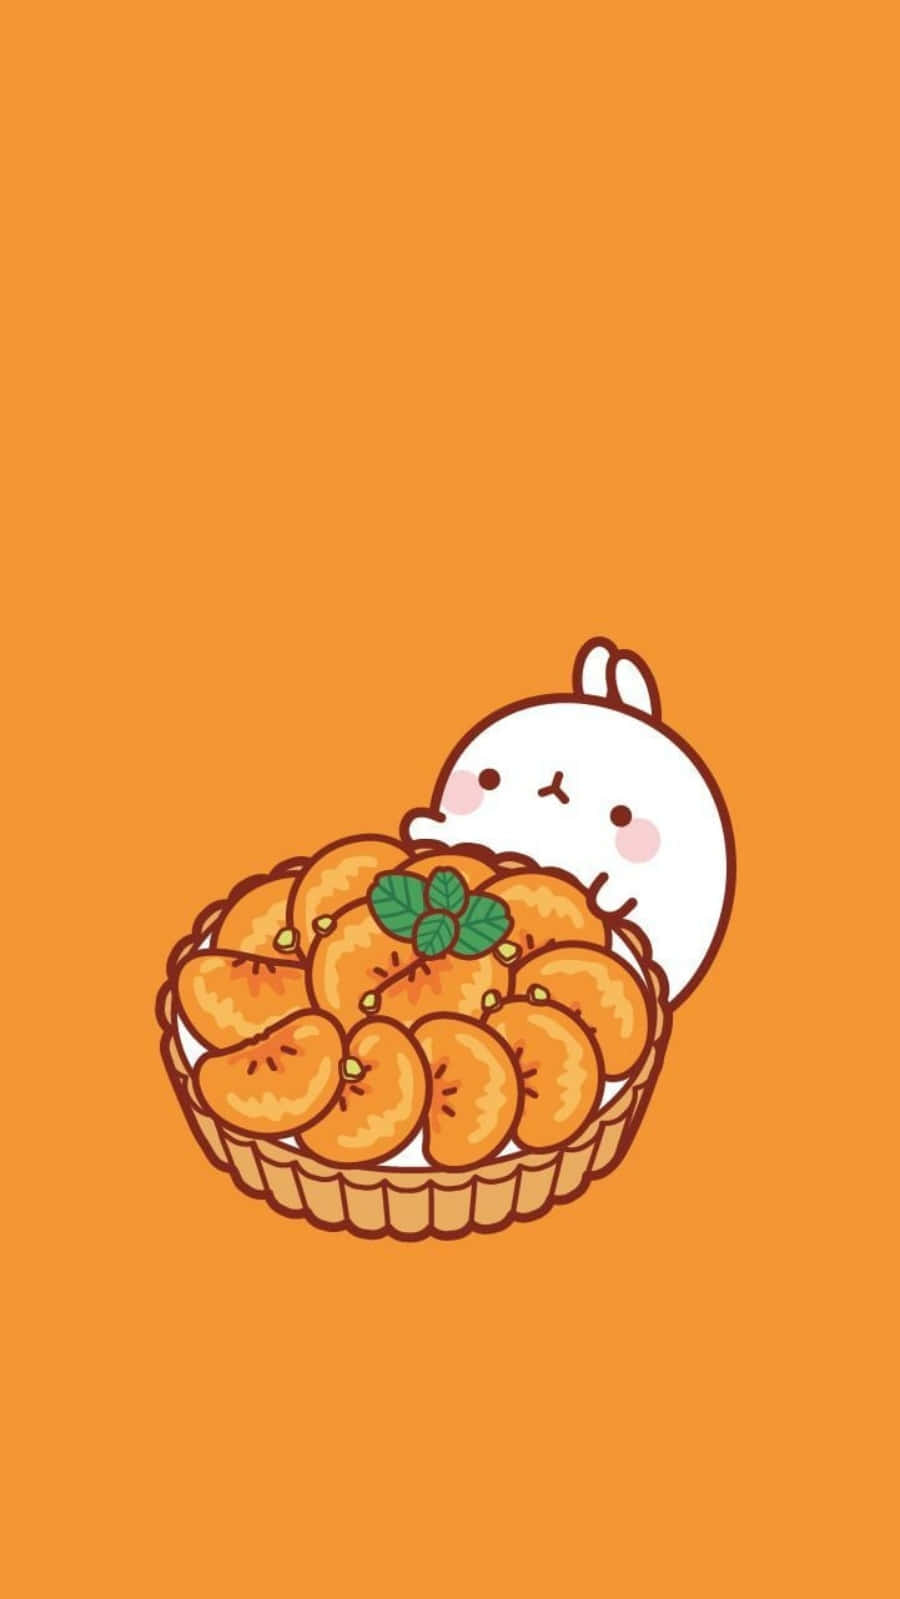 Cute Orange Molang Rabbit Holding Orange Slices